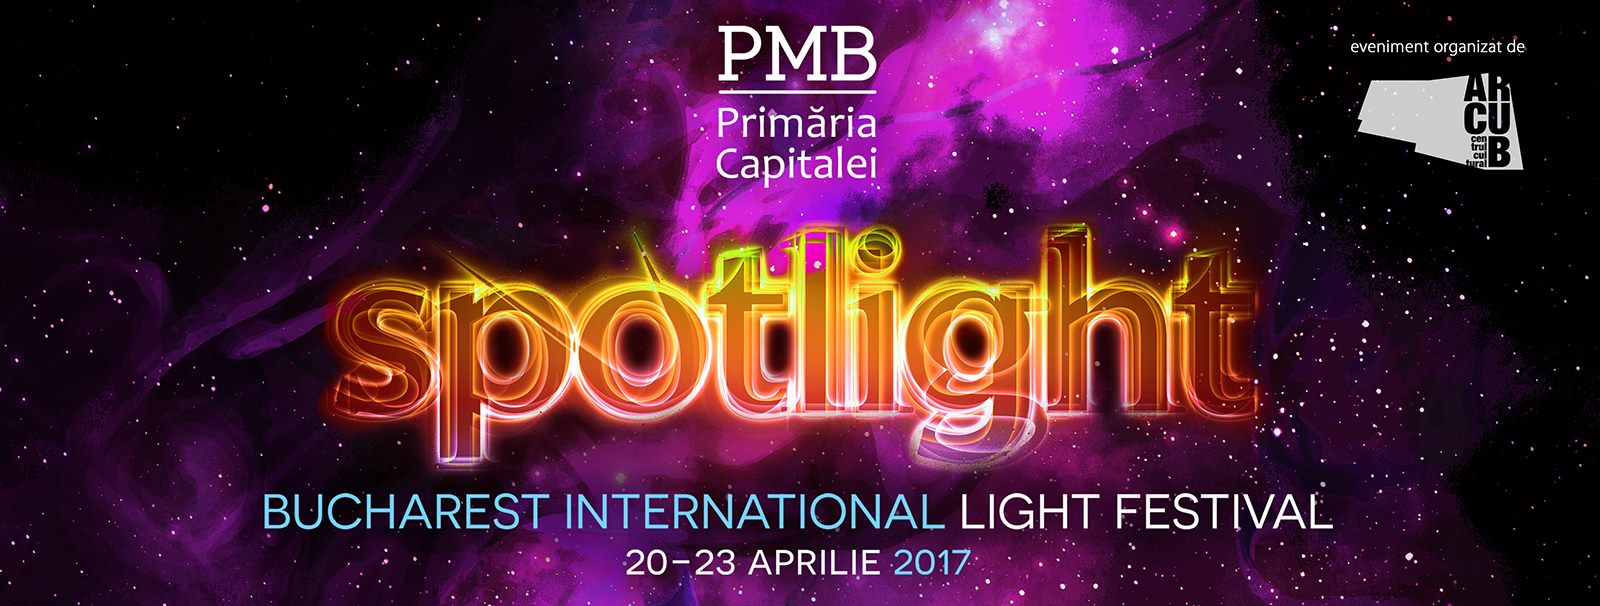 Spotlight – Bucharest International Light Festival #3